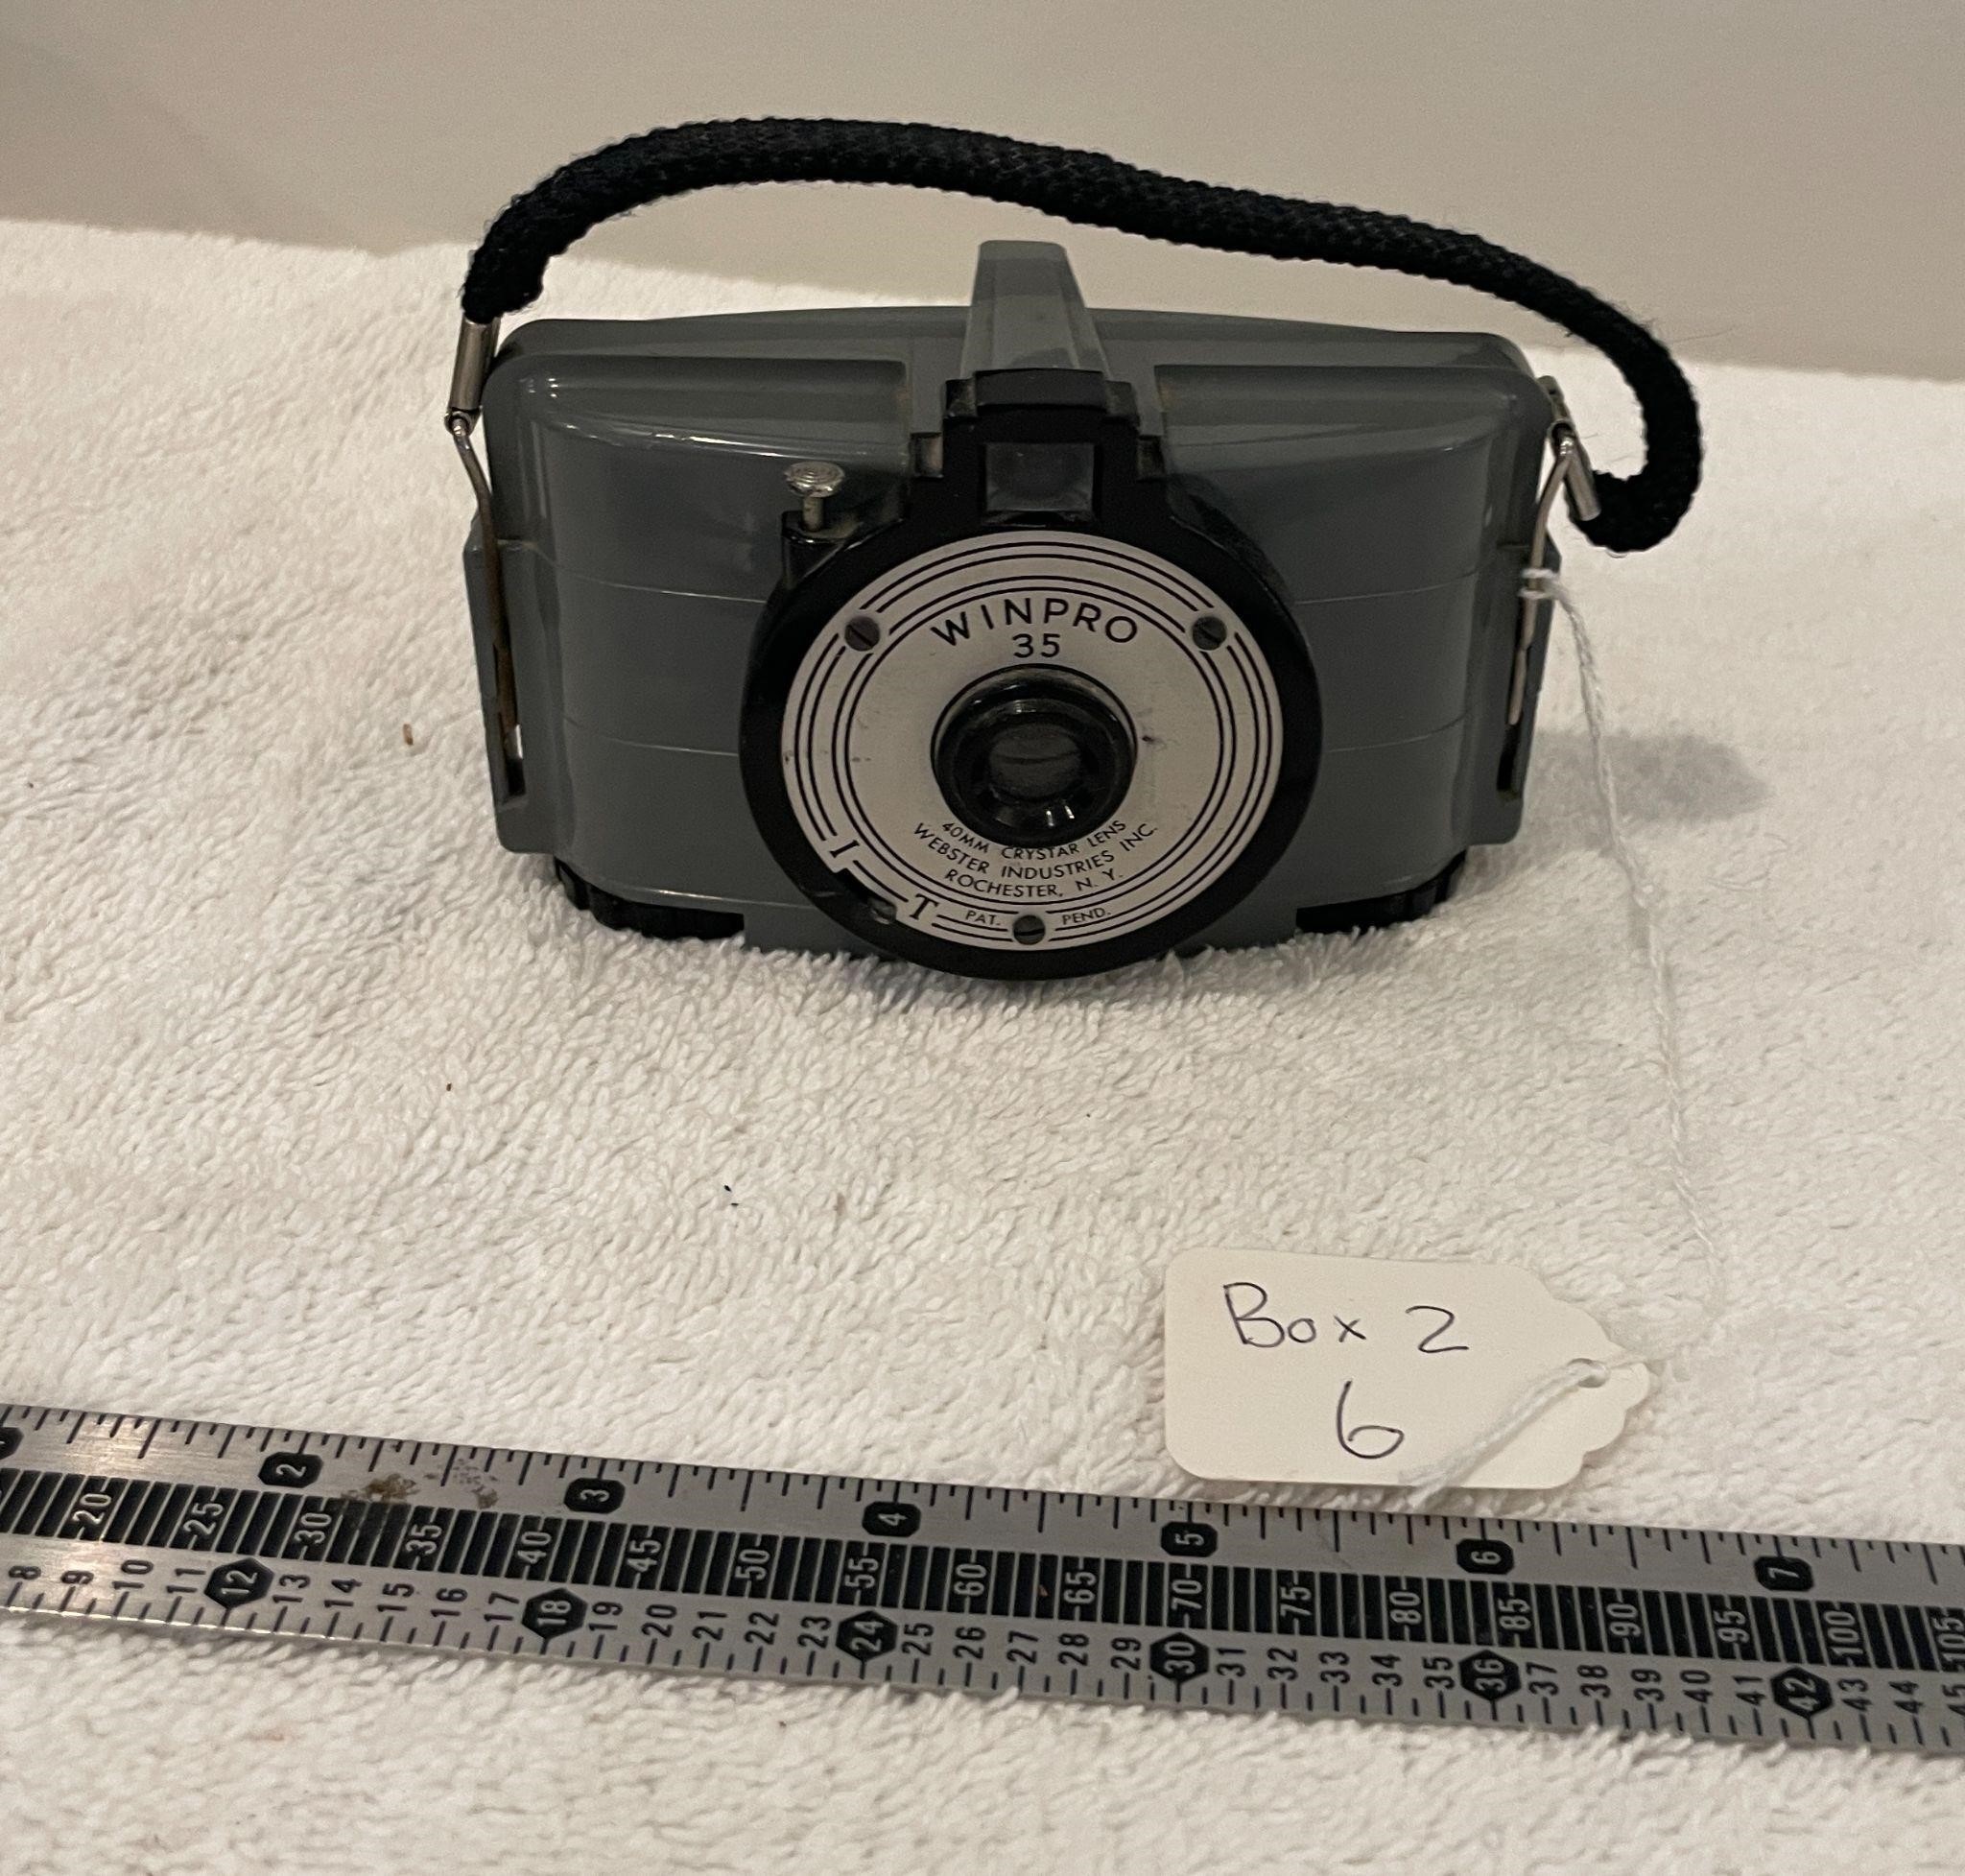 Winpro 35 MM camera, 1947-55